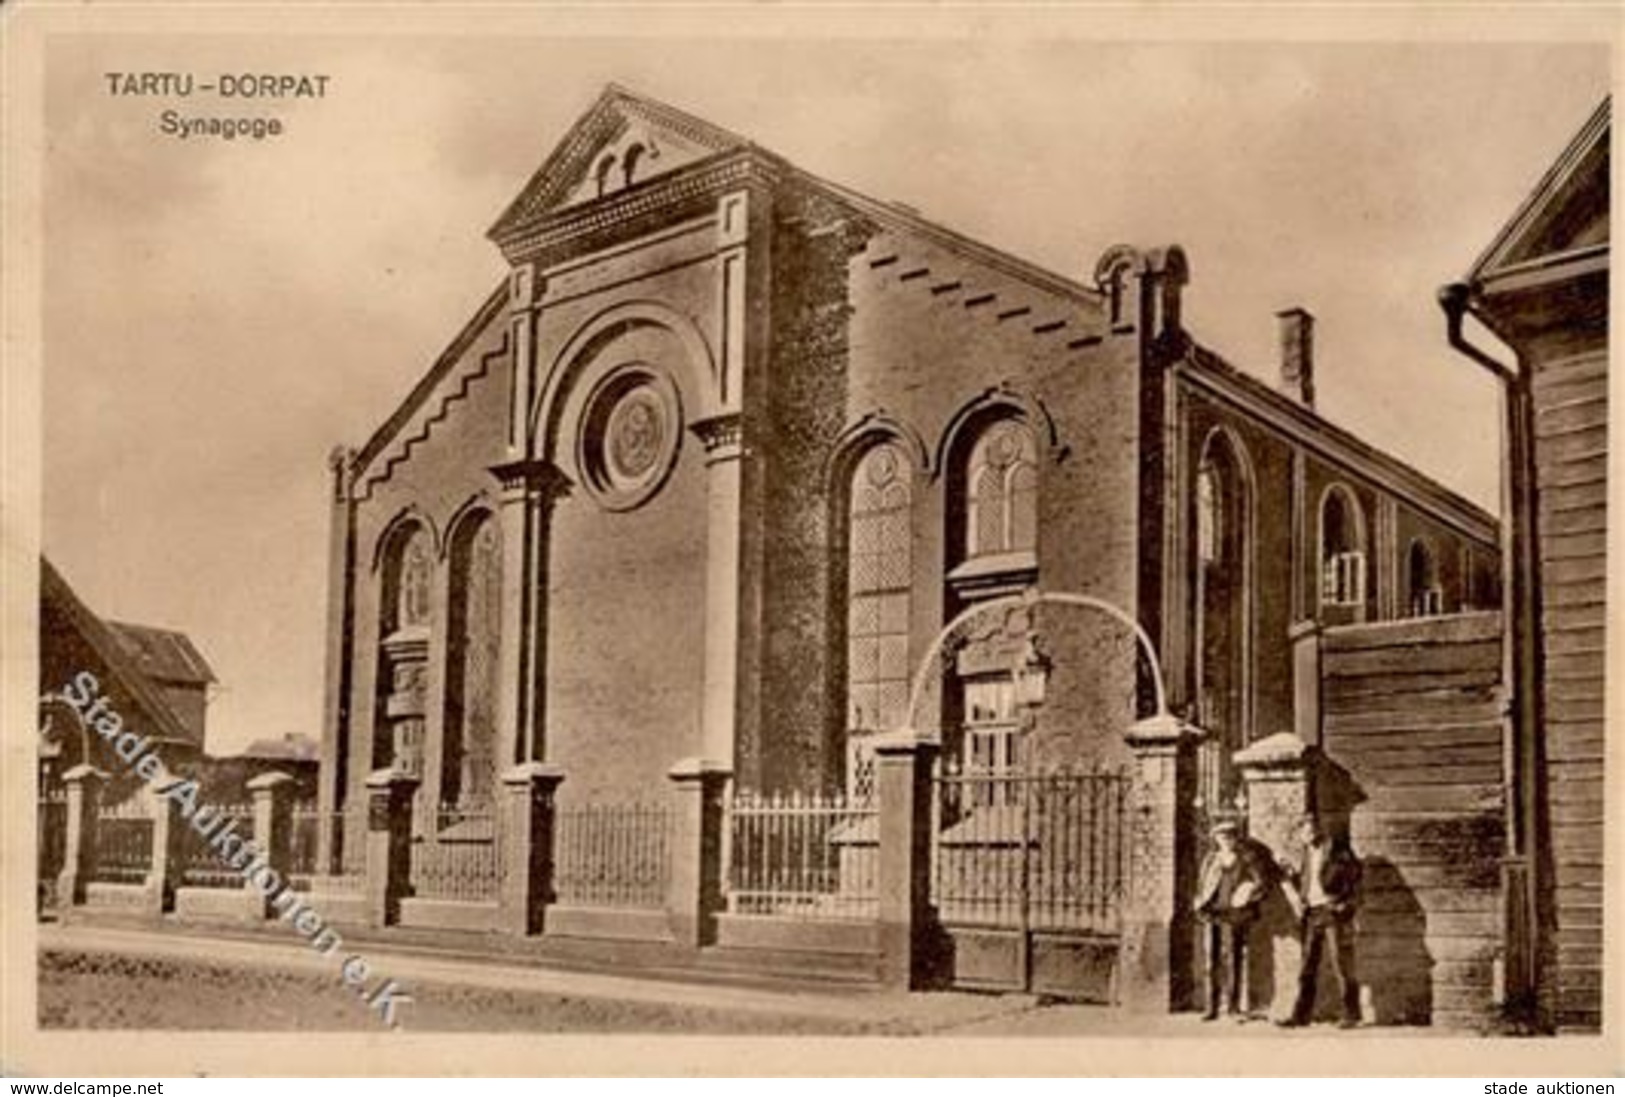 Synagoge TARTU-DORPAT - I-II Synagogue - Giudaismo